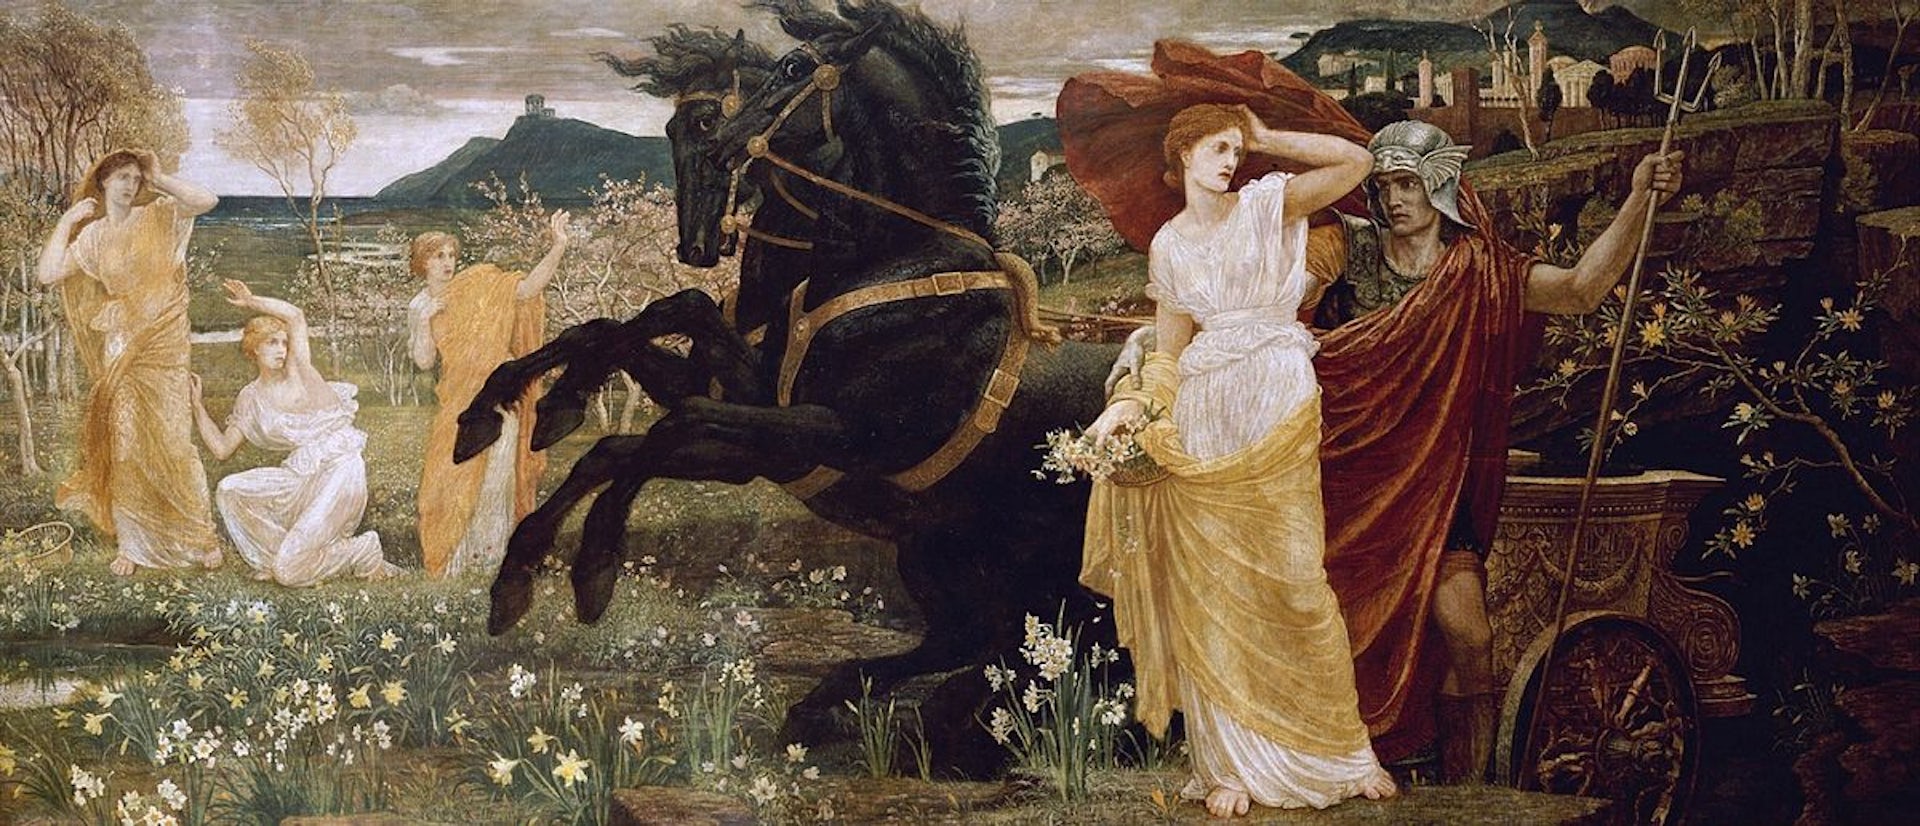 Walter Crane - The Fate of Persephone (1877)